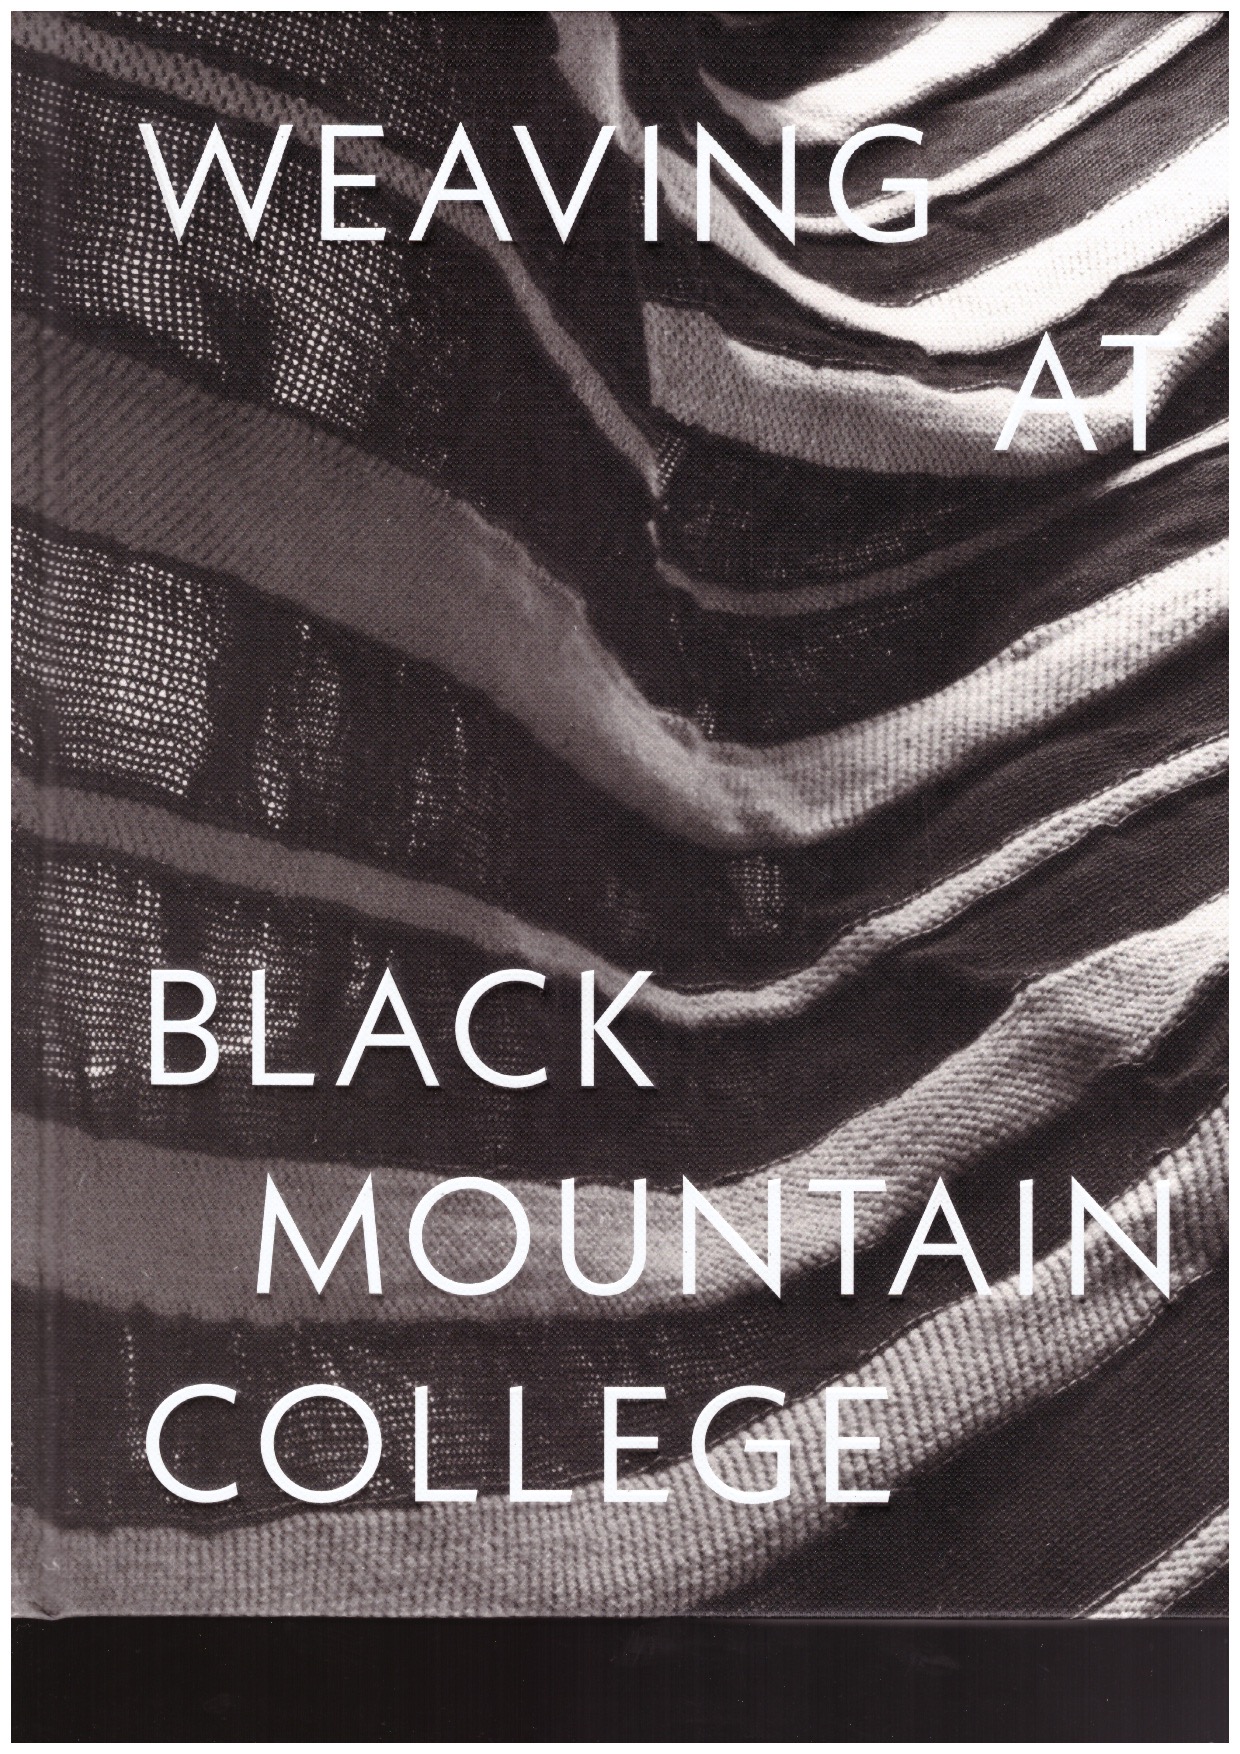 BEGGS, Michael; THOMSON, Julie J. - Weaving at Black Moutain College